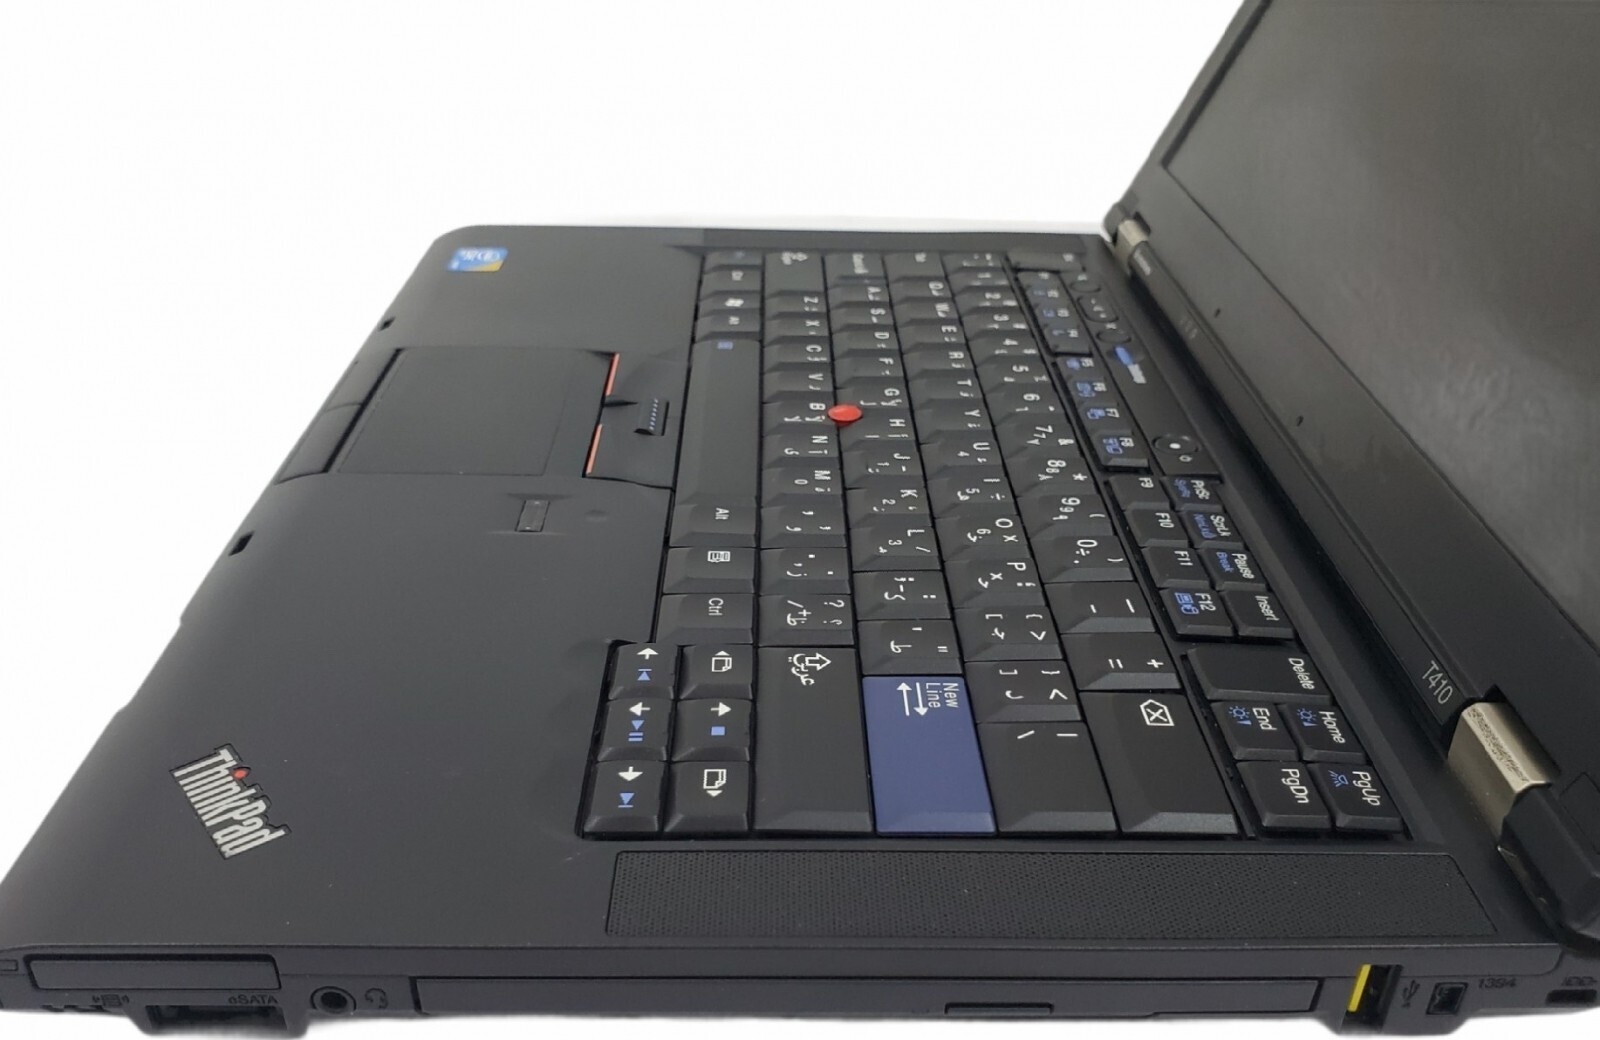 Lenovo ThinkPad T410 Intel i5 520M 2.40GHz 4GB RAM 320GB HDD 14.1" Win 10 - B Grade Image 1